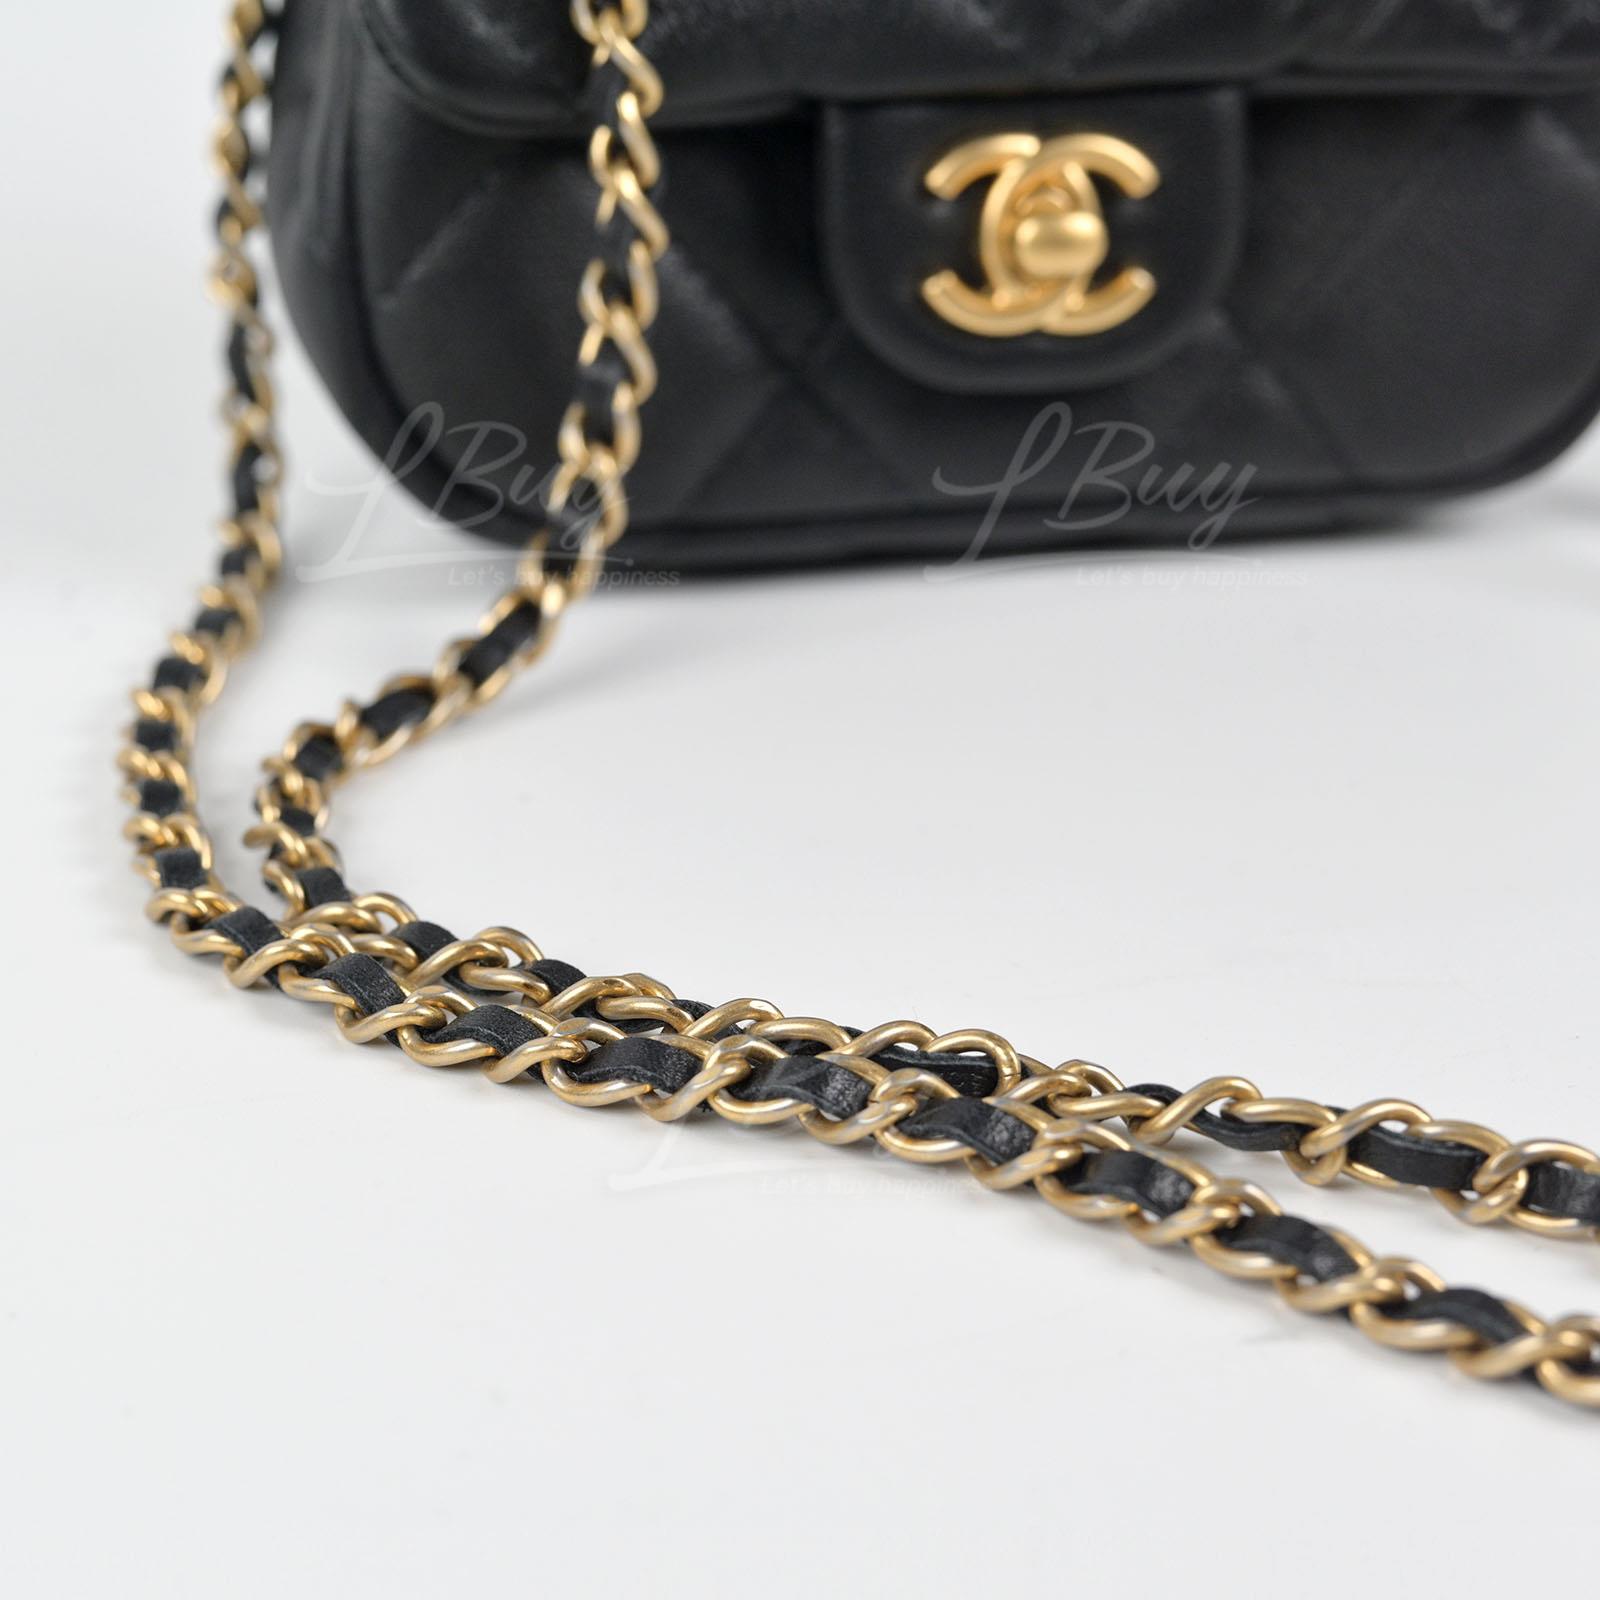 CHANEL-Chanel Mini Calfskin Flap Bag with Chain